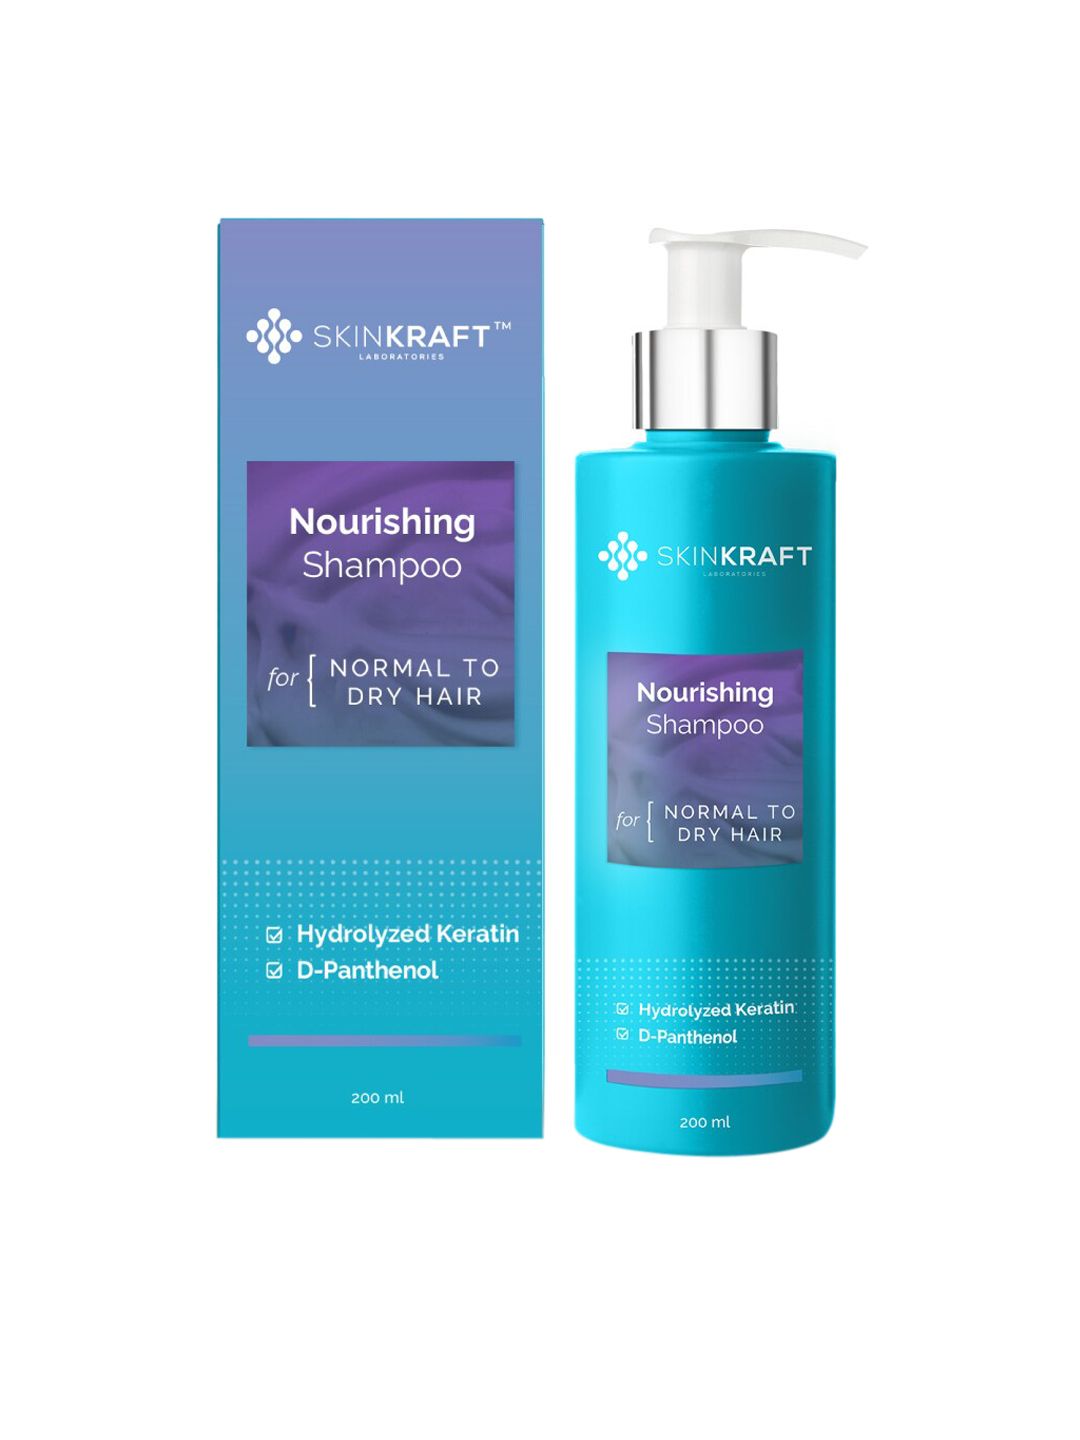 SKINKRAFT Hydrolyzed Keratin Nourishing Shampoo for Normal to Dry Hair - 200 ml Price in India